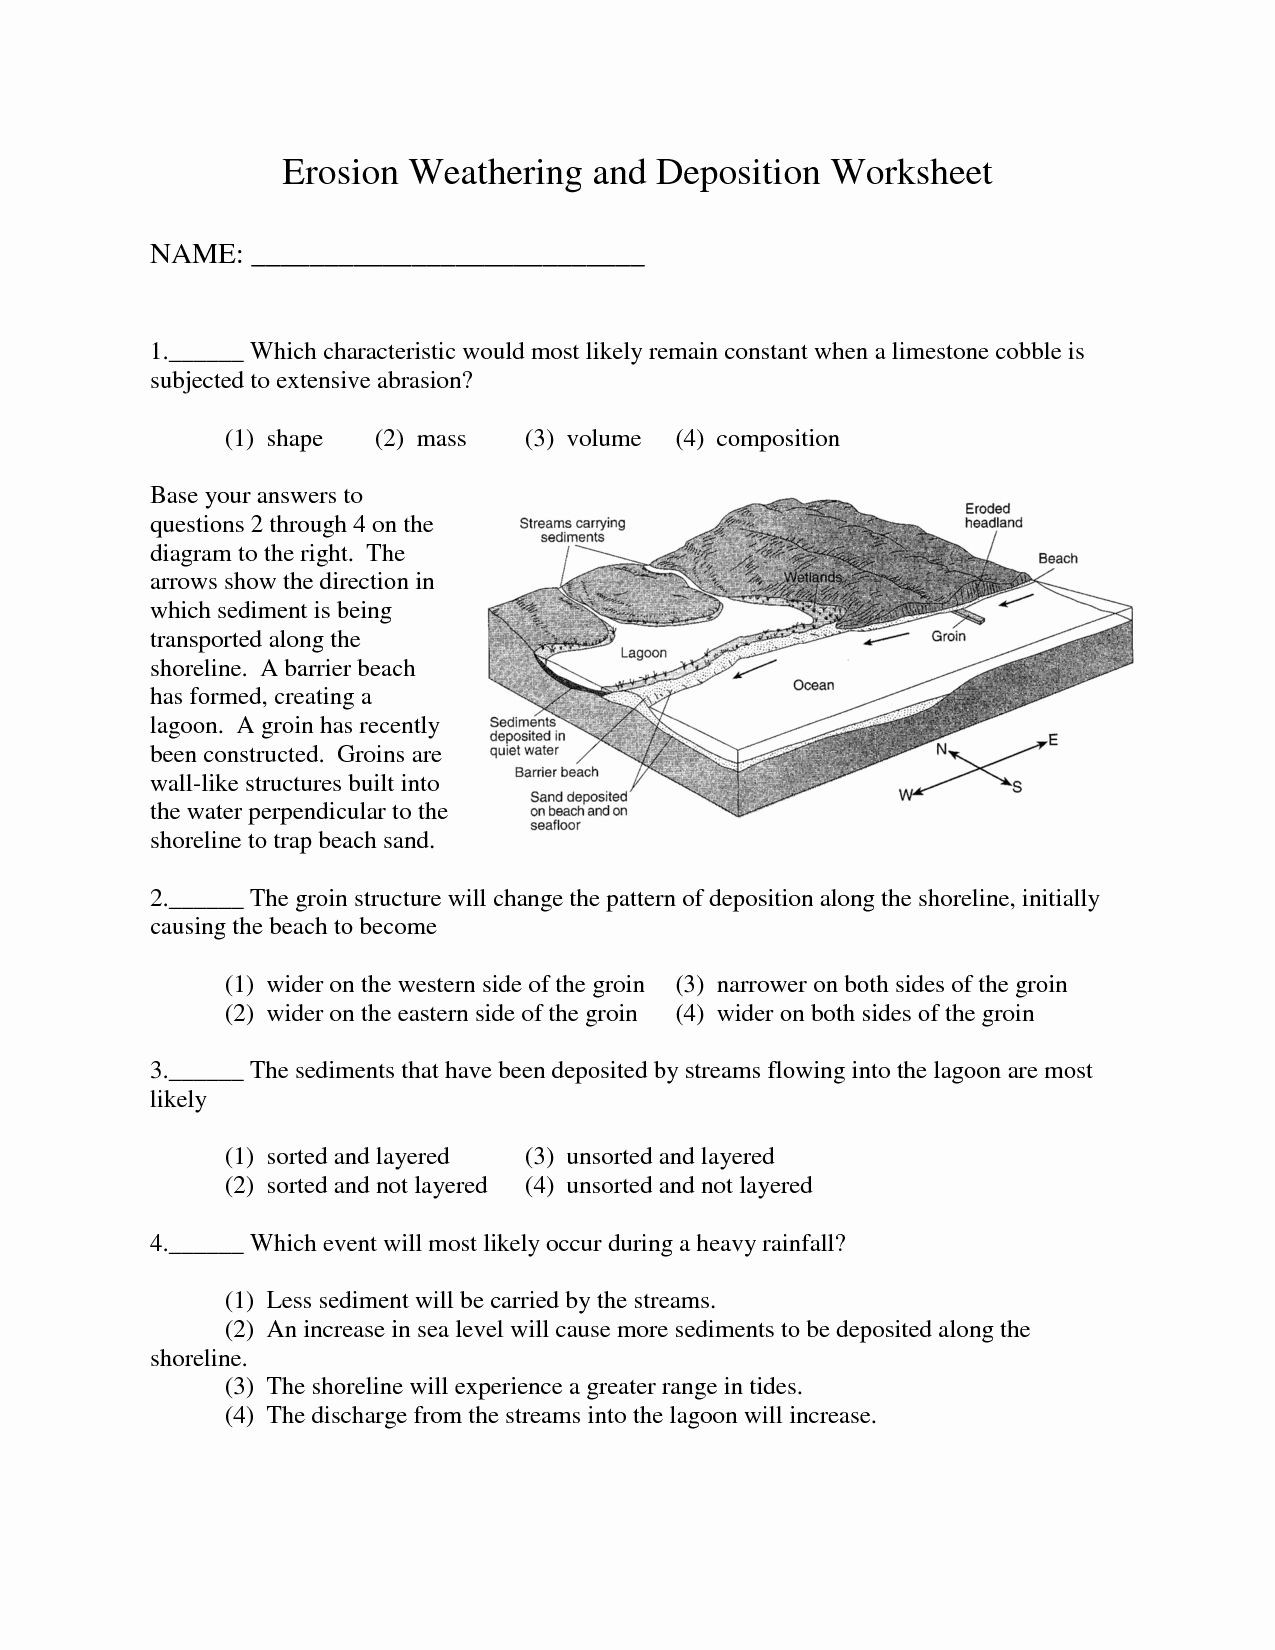 Erosion and Deposition Worksheet Weathering Erosion and Deposition Worksheet Elegant 16 Best